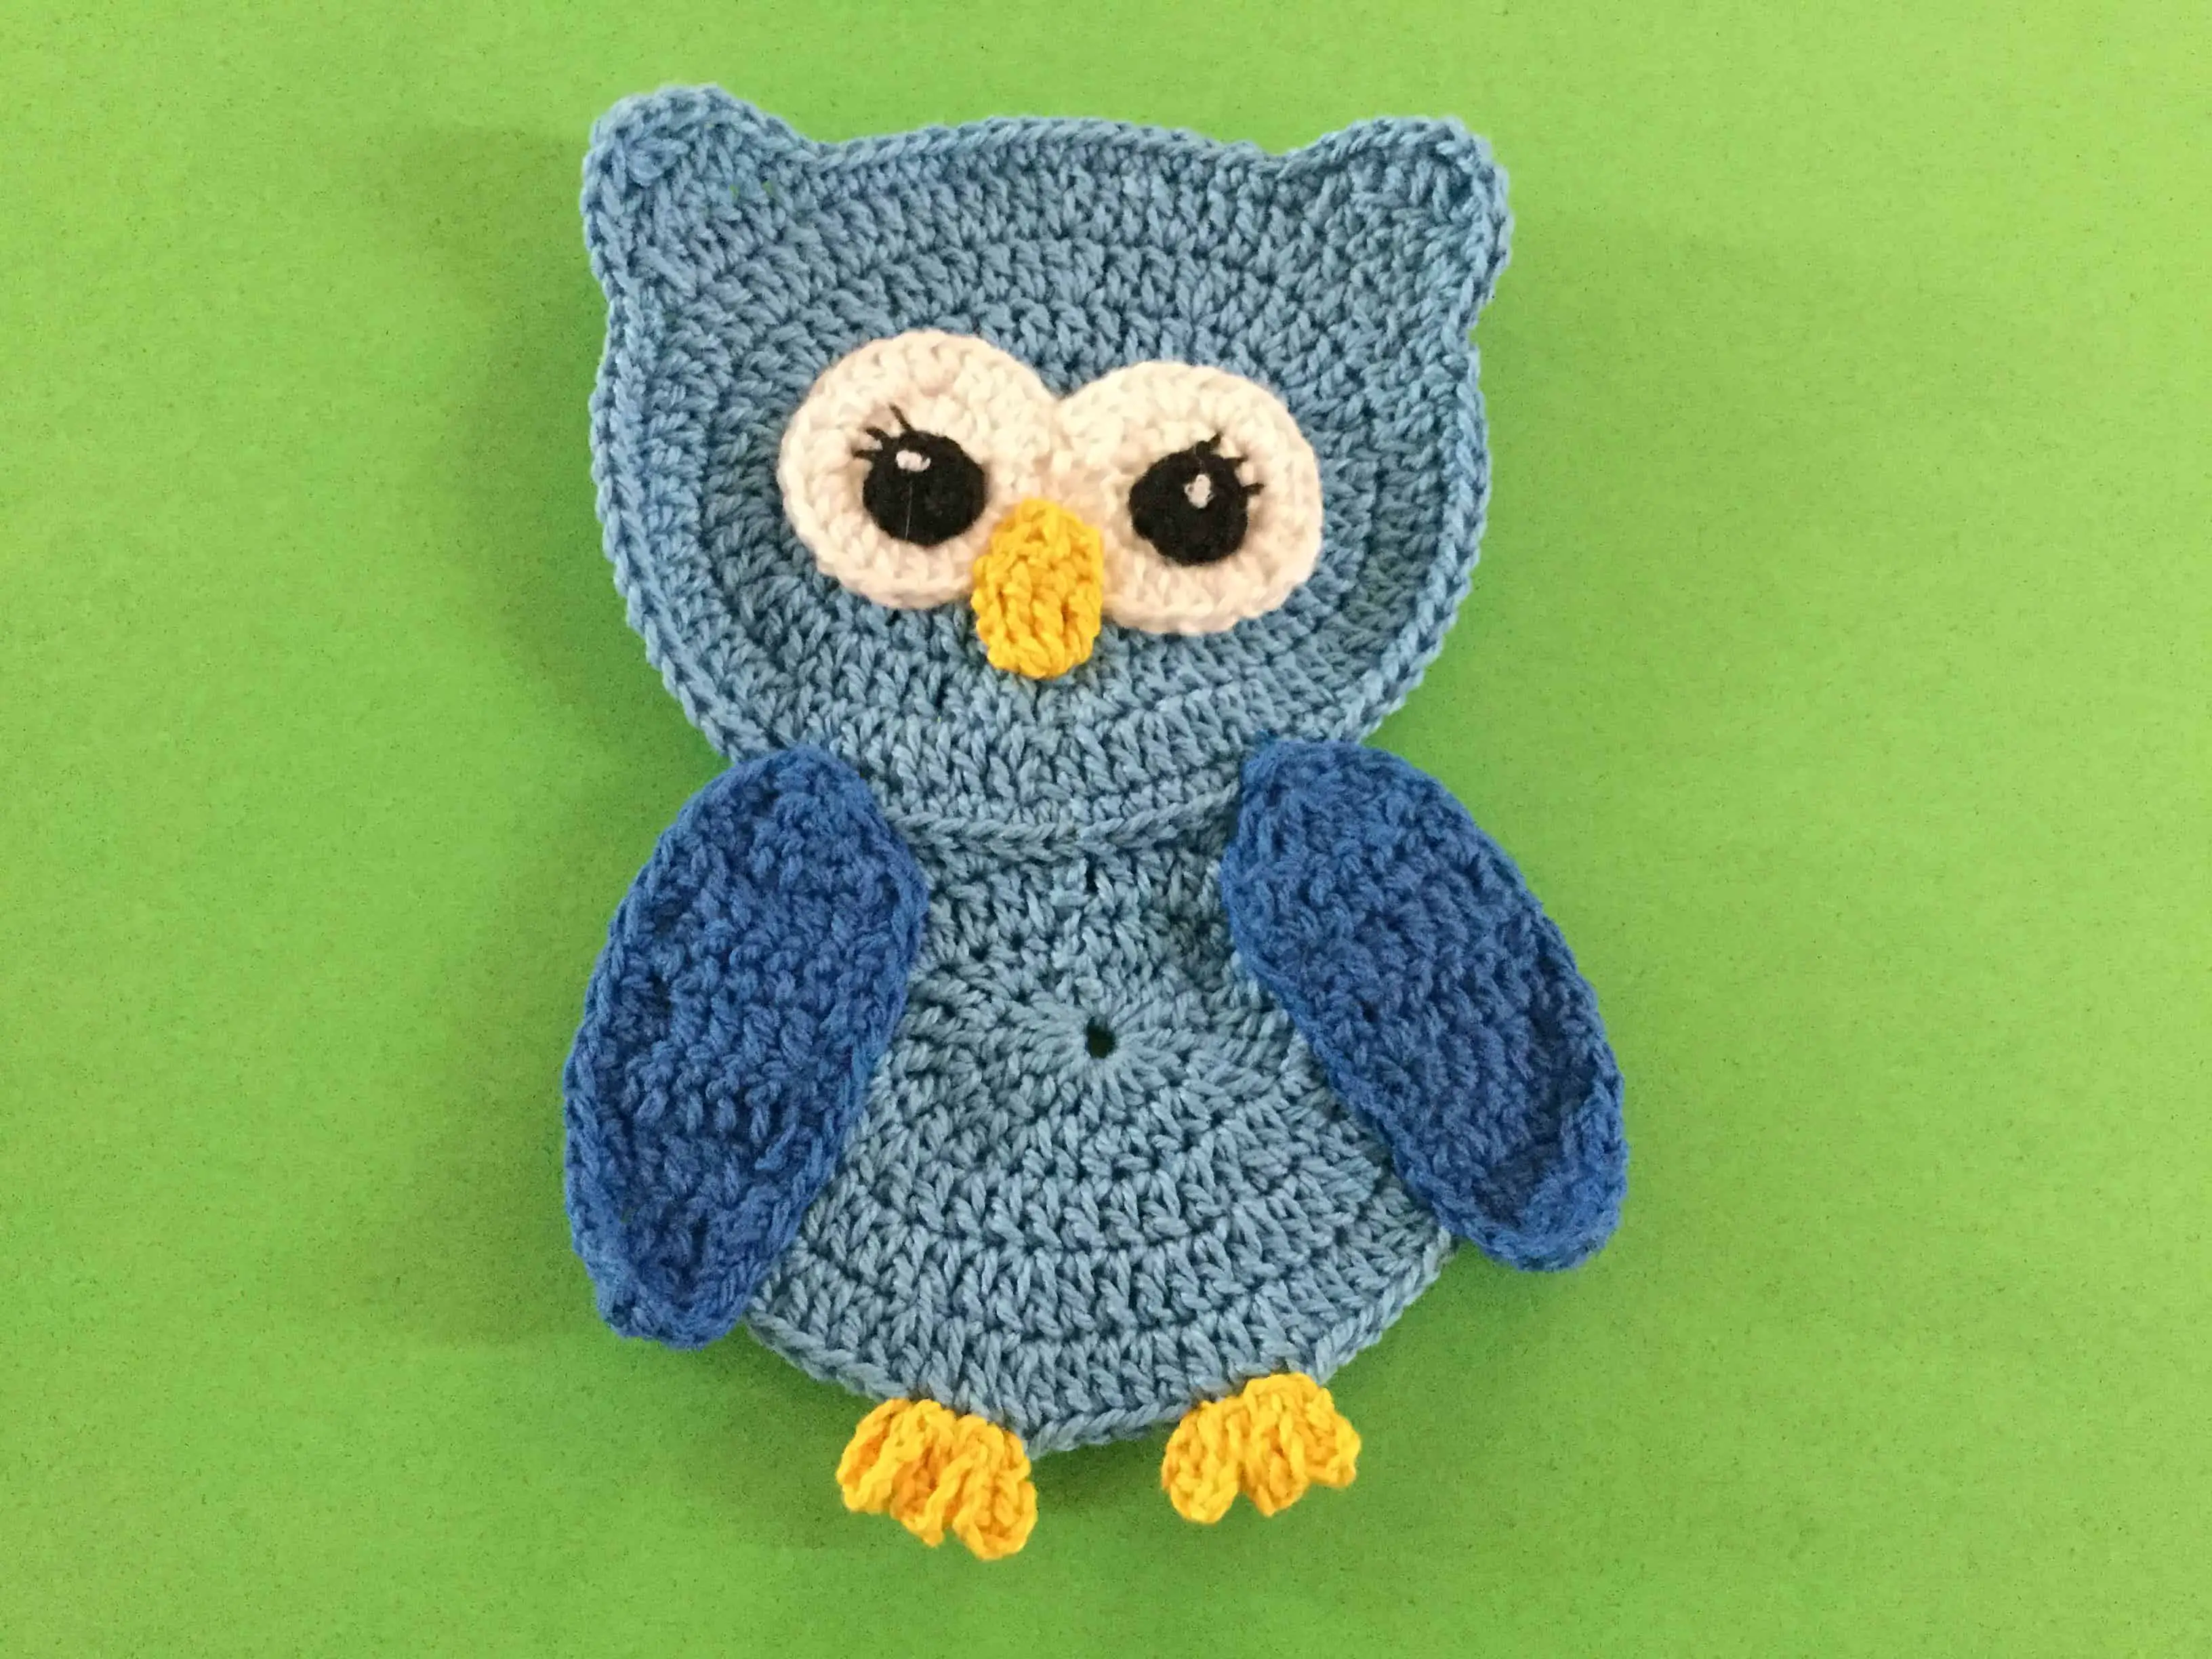 Finished crochet owl landscape